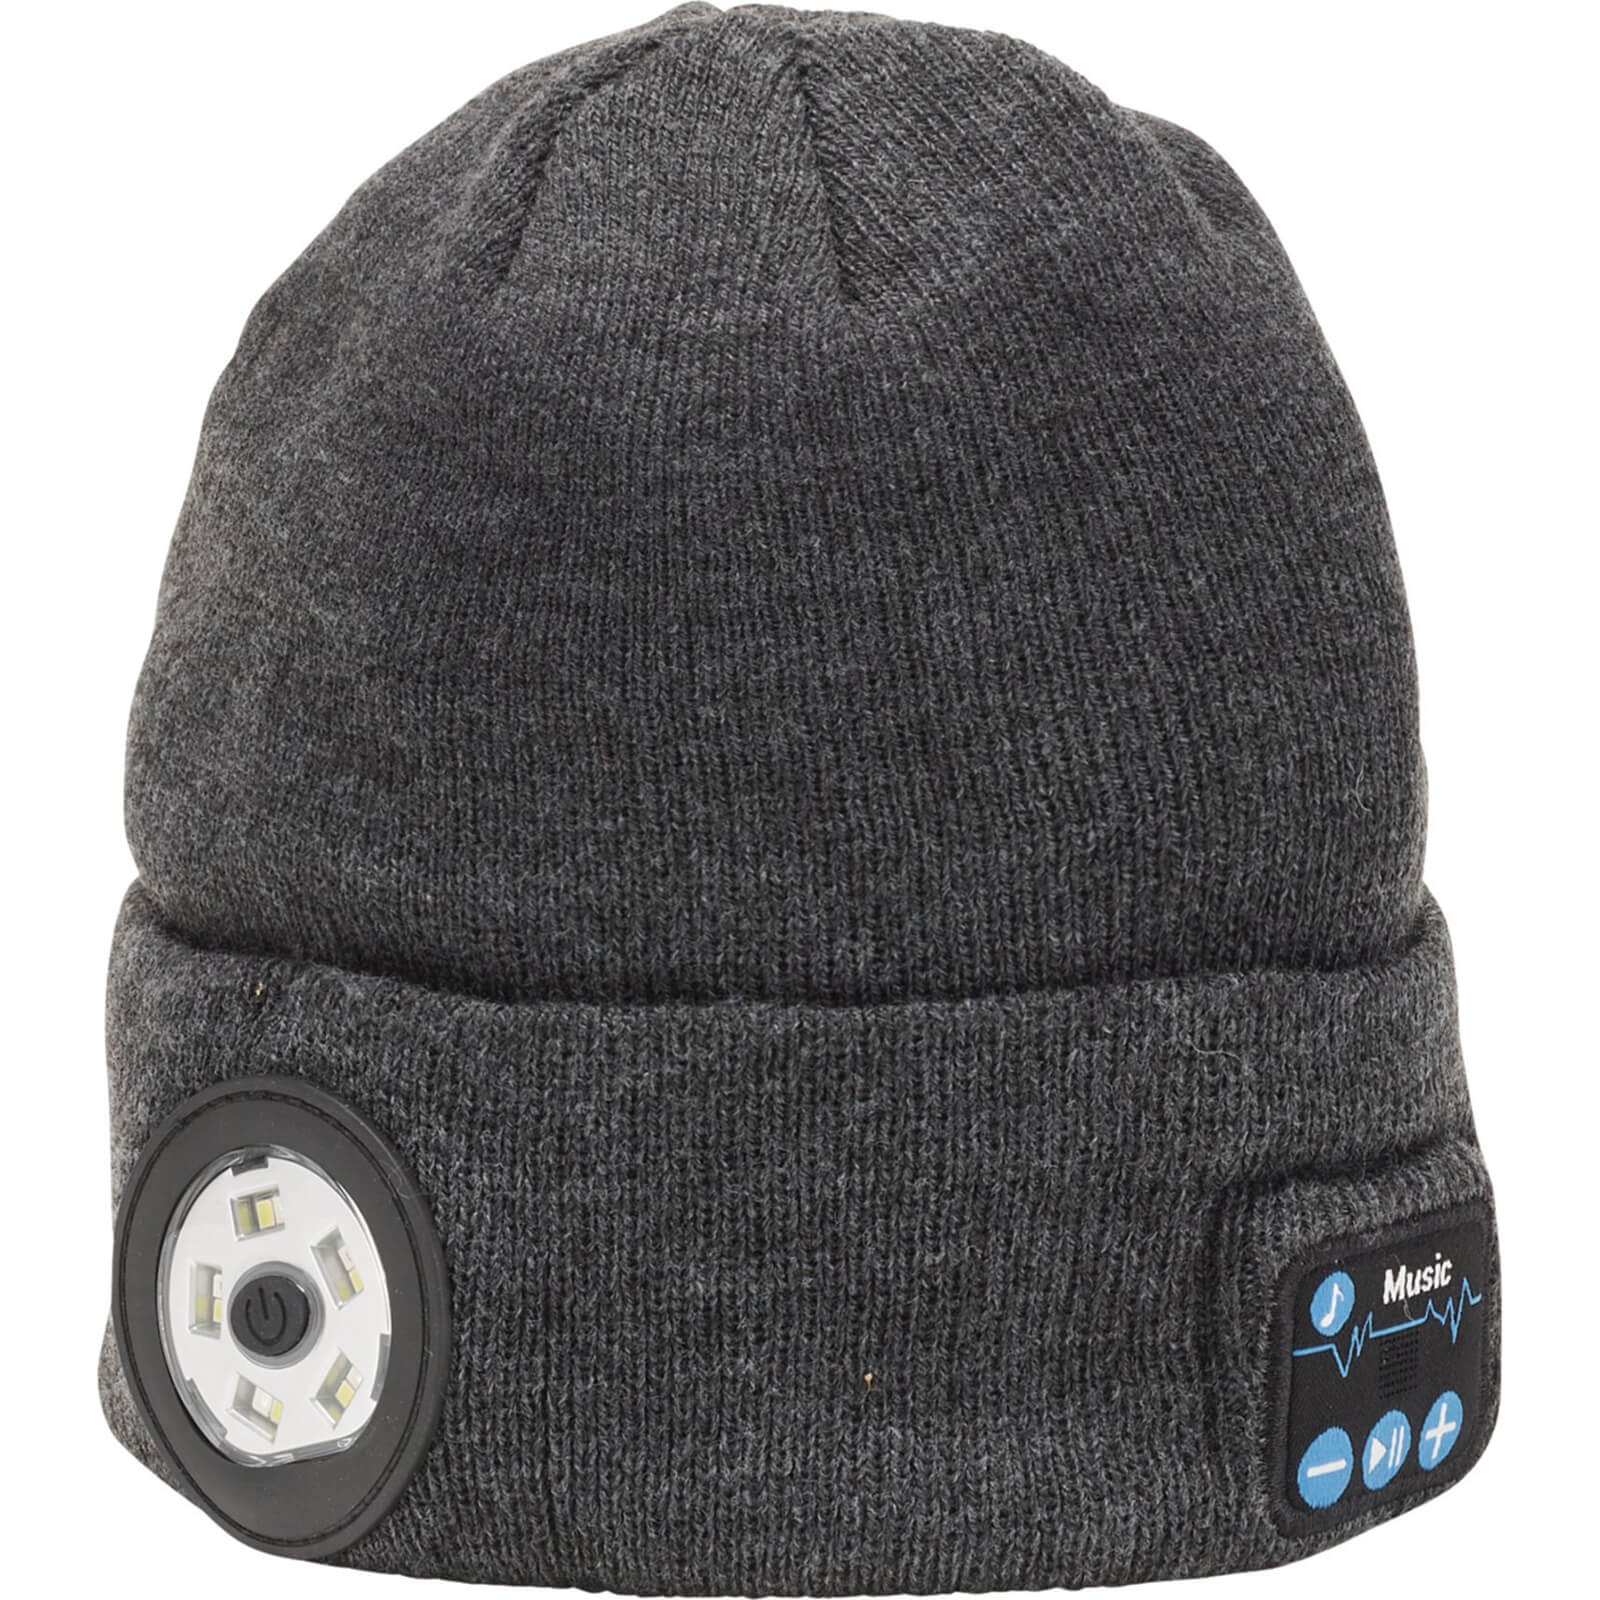 Draper Smart Wireless Head Torch Beanie Hat Grey One Size